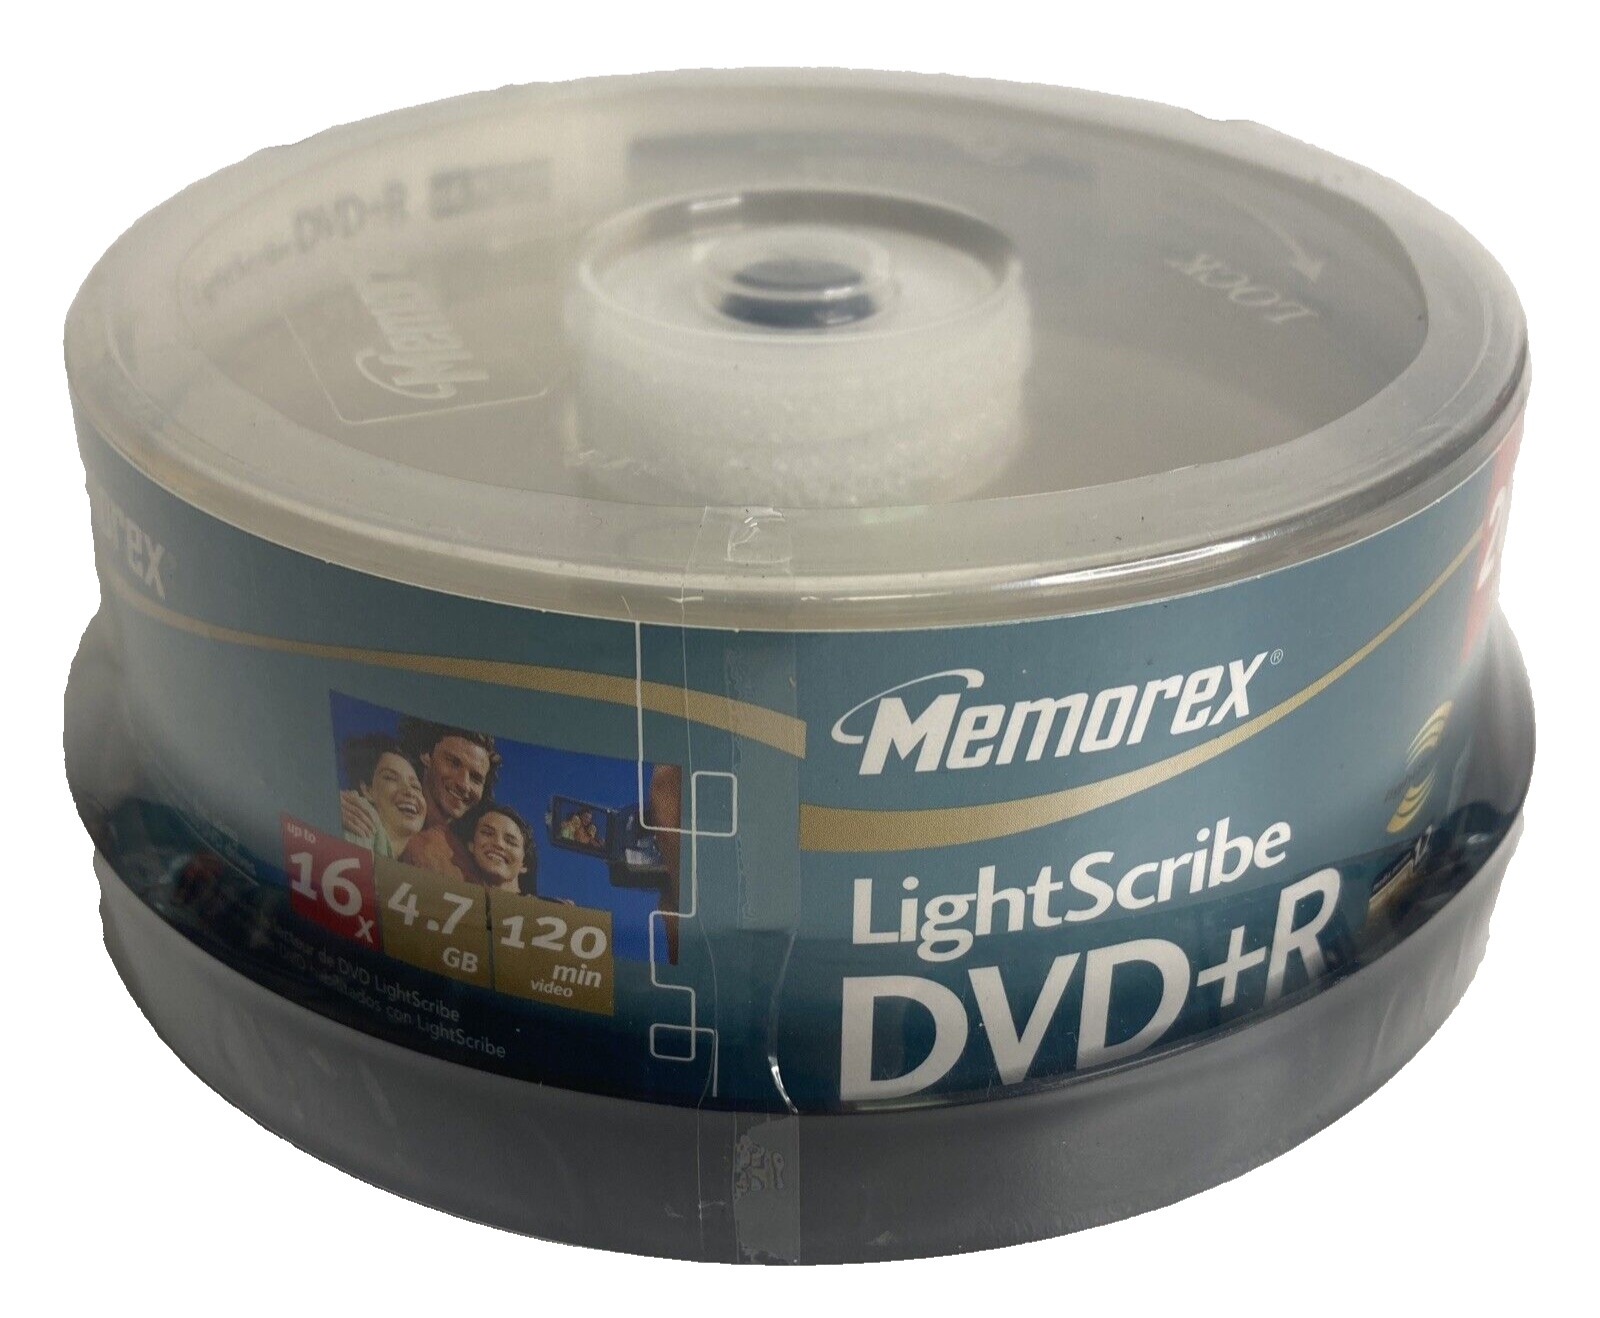 Memorex 4.7GB, 16X, 120 Minute LightScribe DVD+R 20 COUNT NEW SEALED